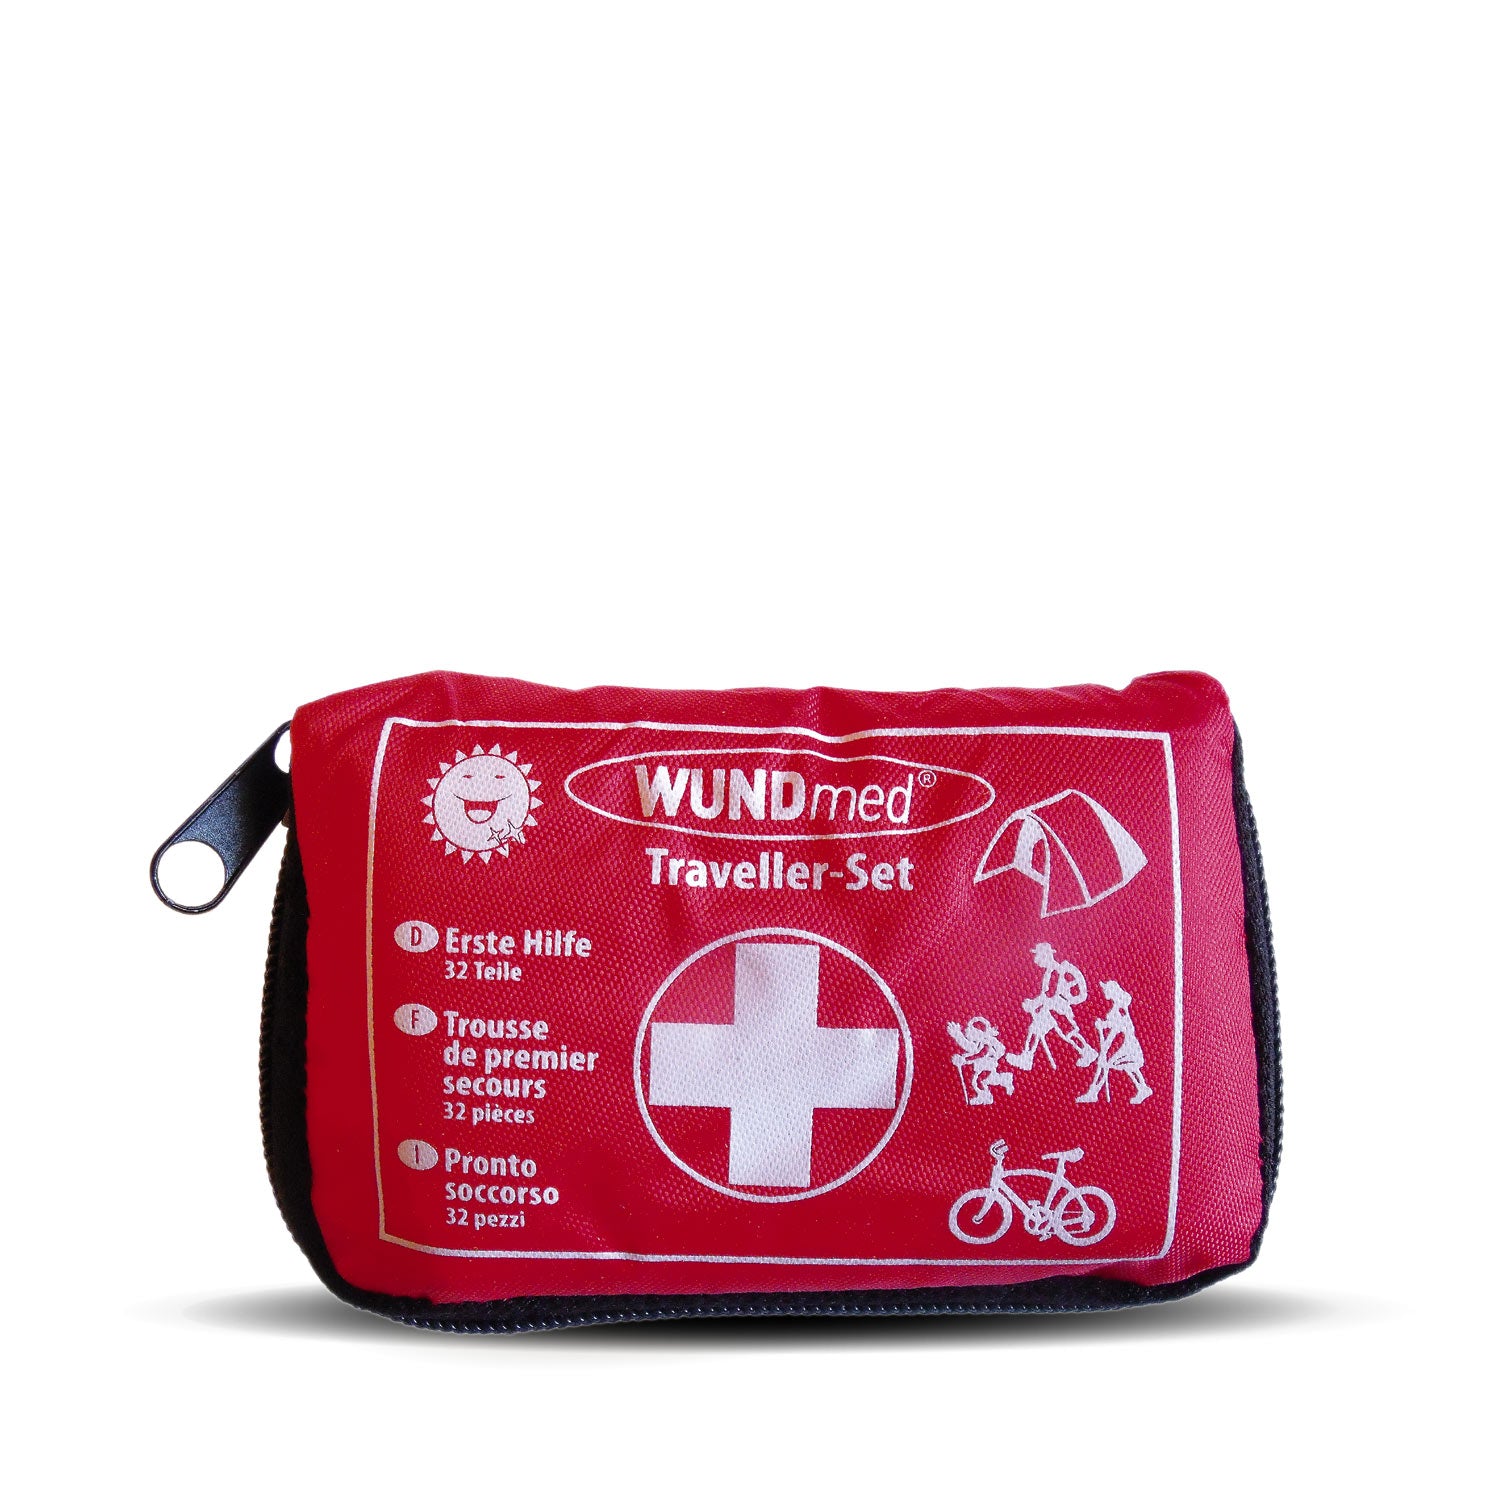 WUNDmed® Traveller-Set zur Erstversorgung – ascopharm